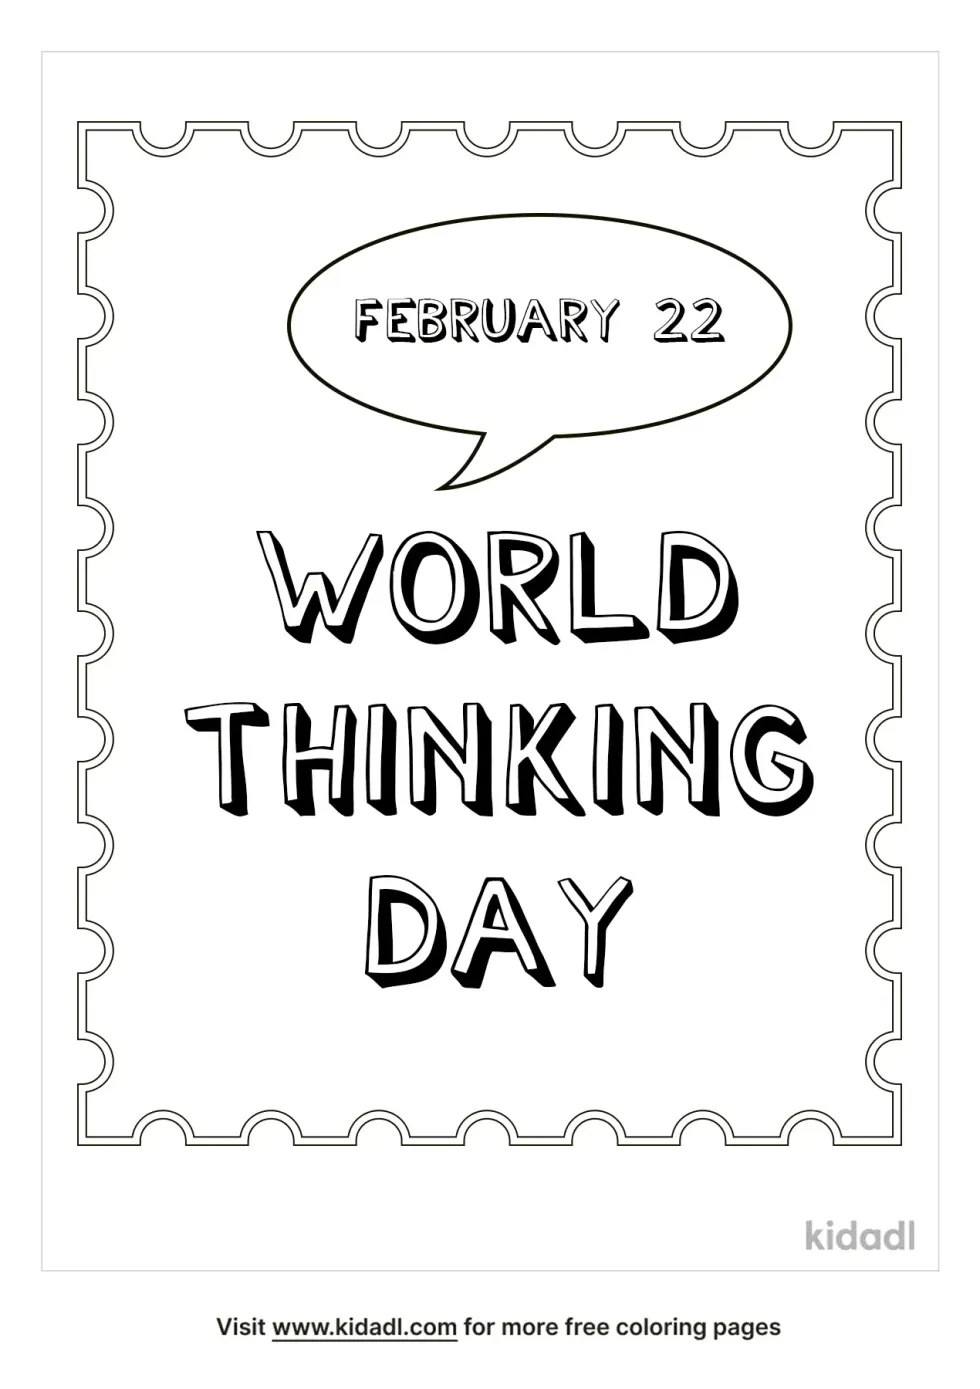 World Thinking Day